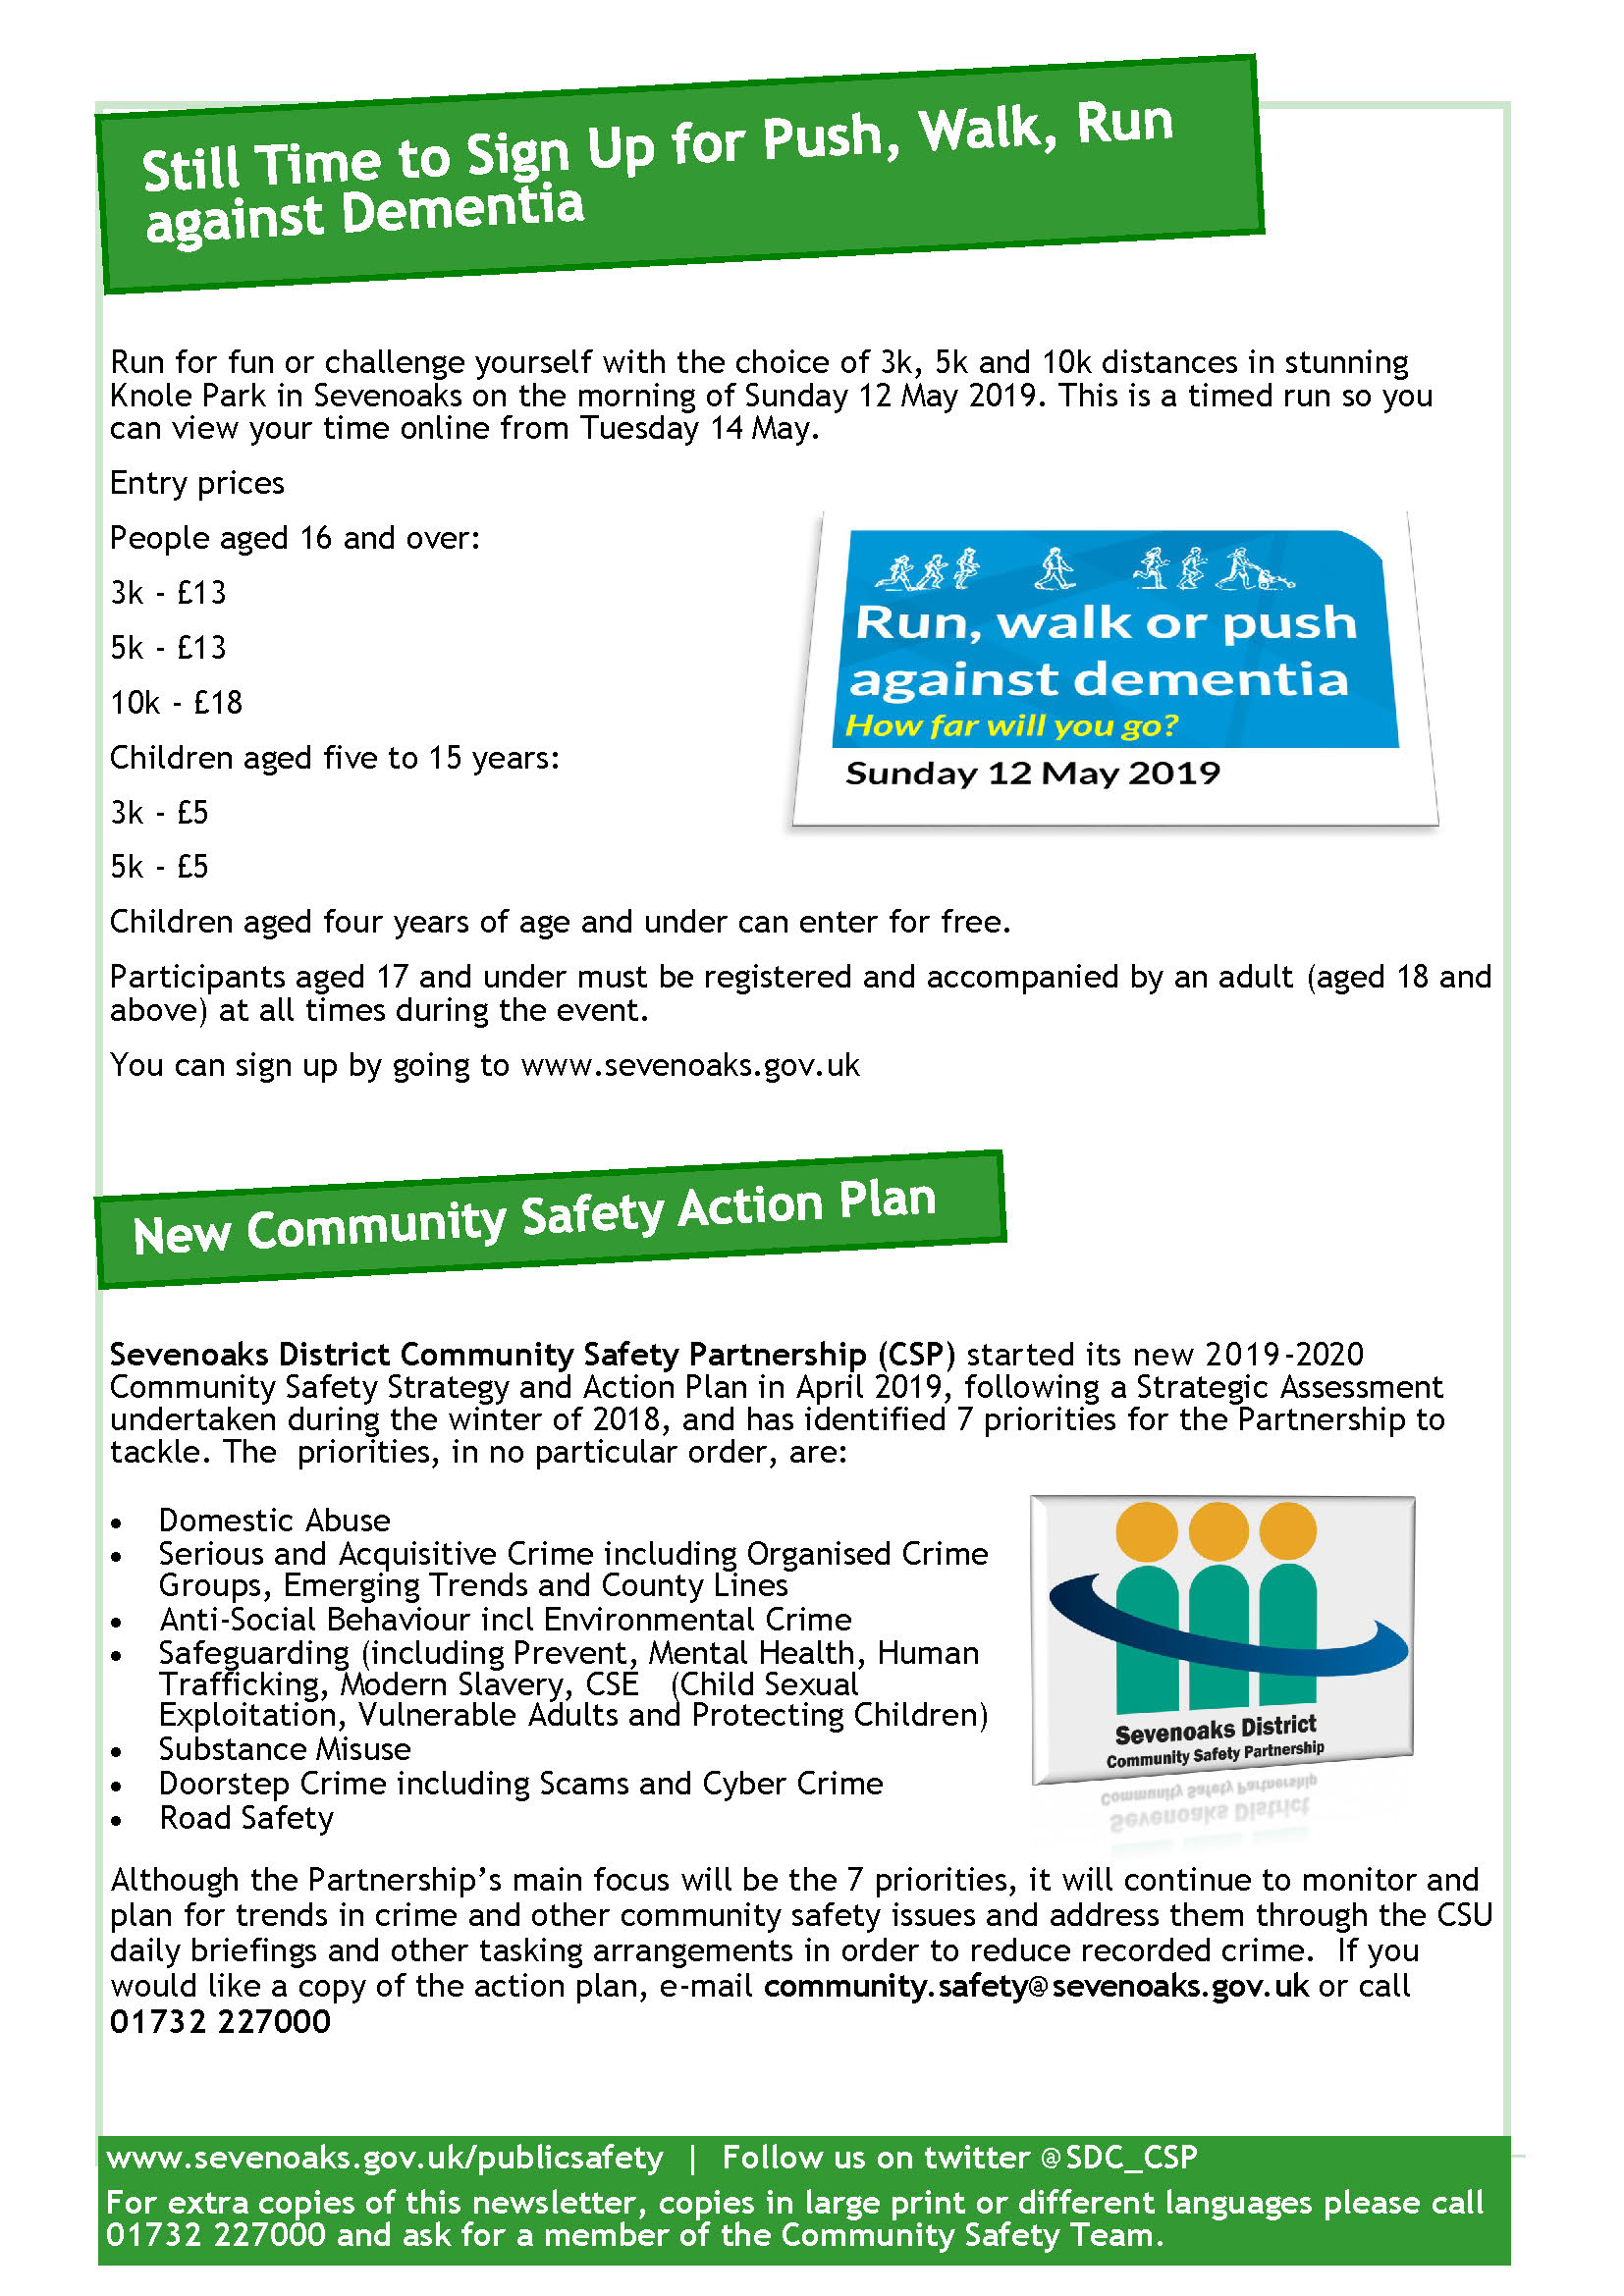 Dunton Green Parish Council Community Safety Unit - News & Advice